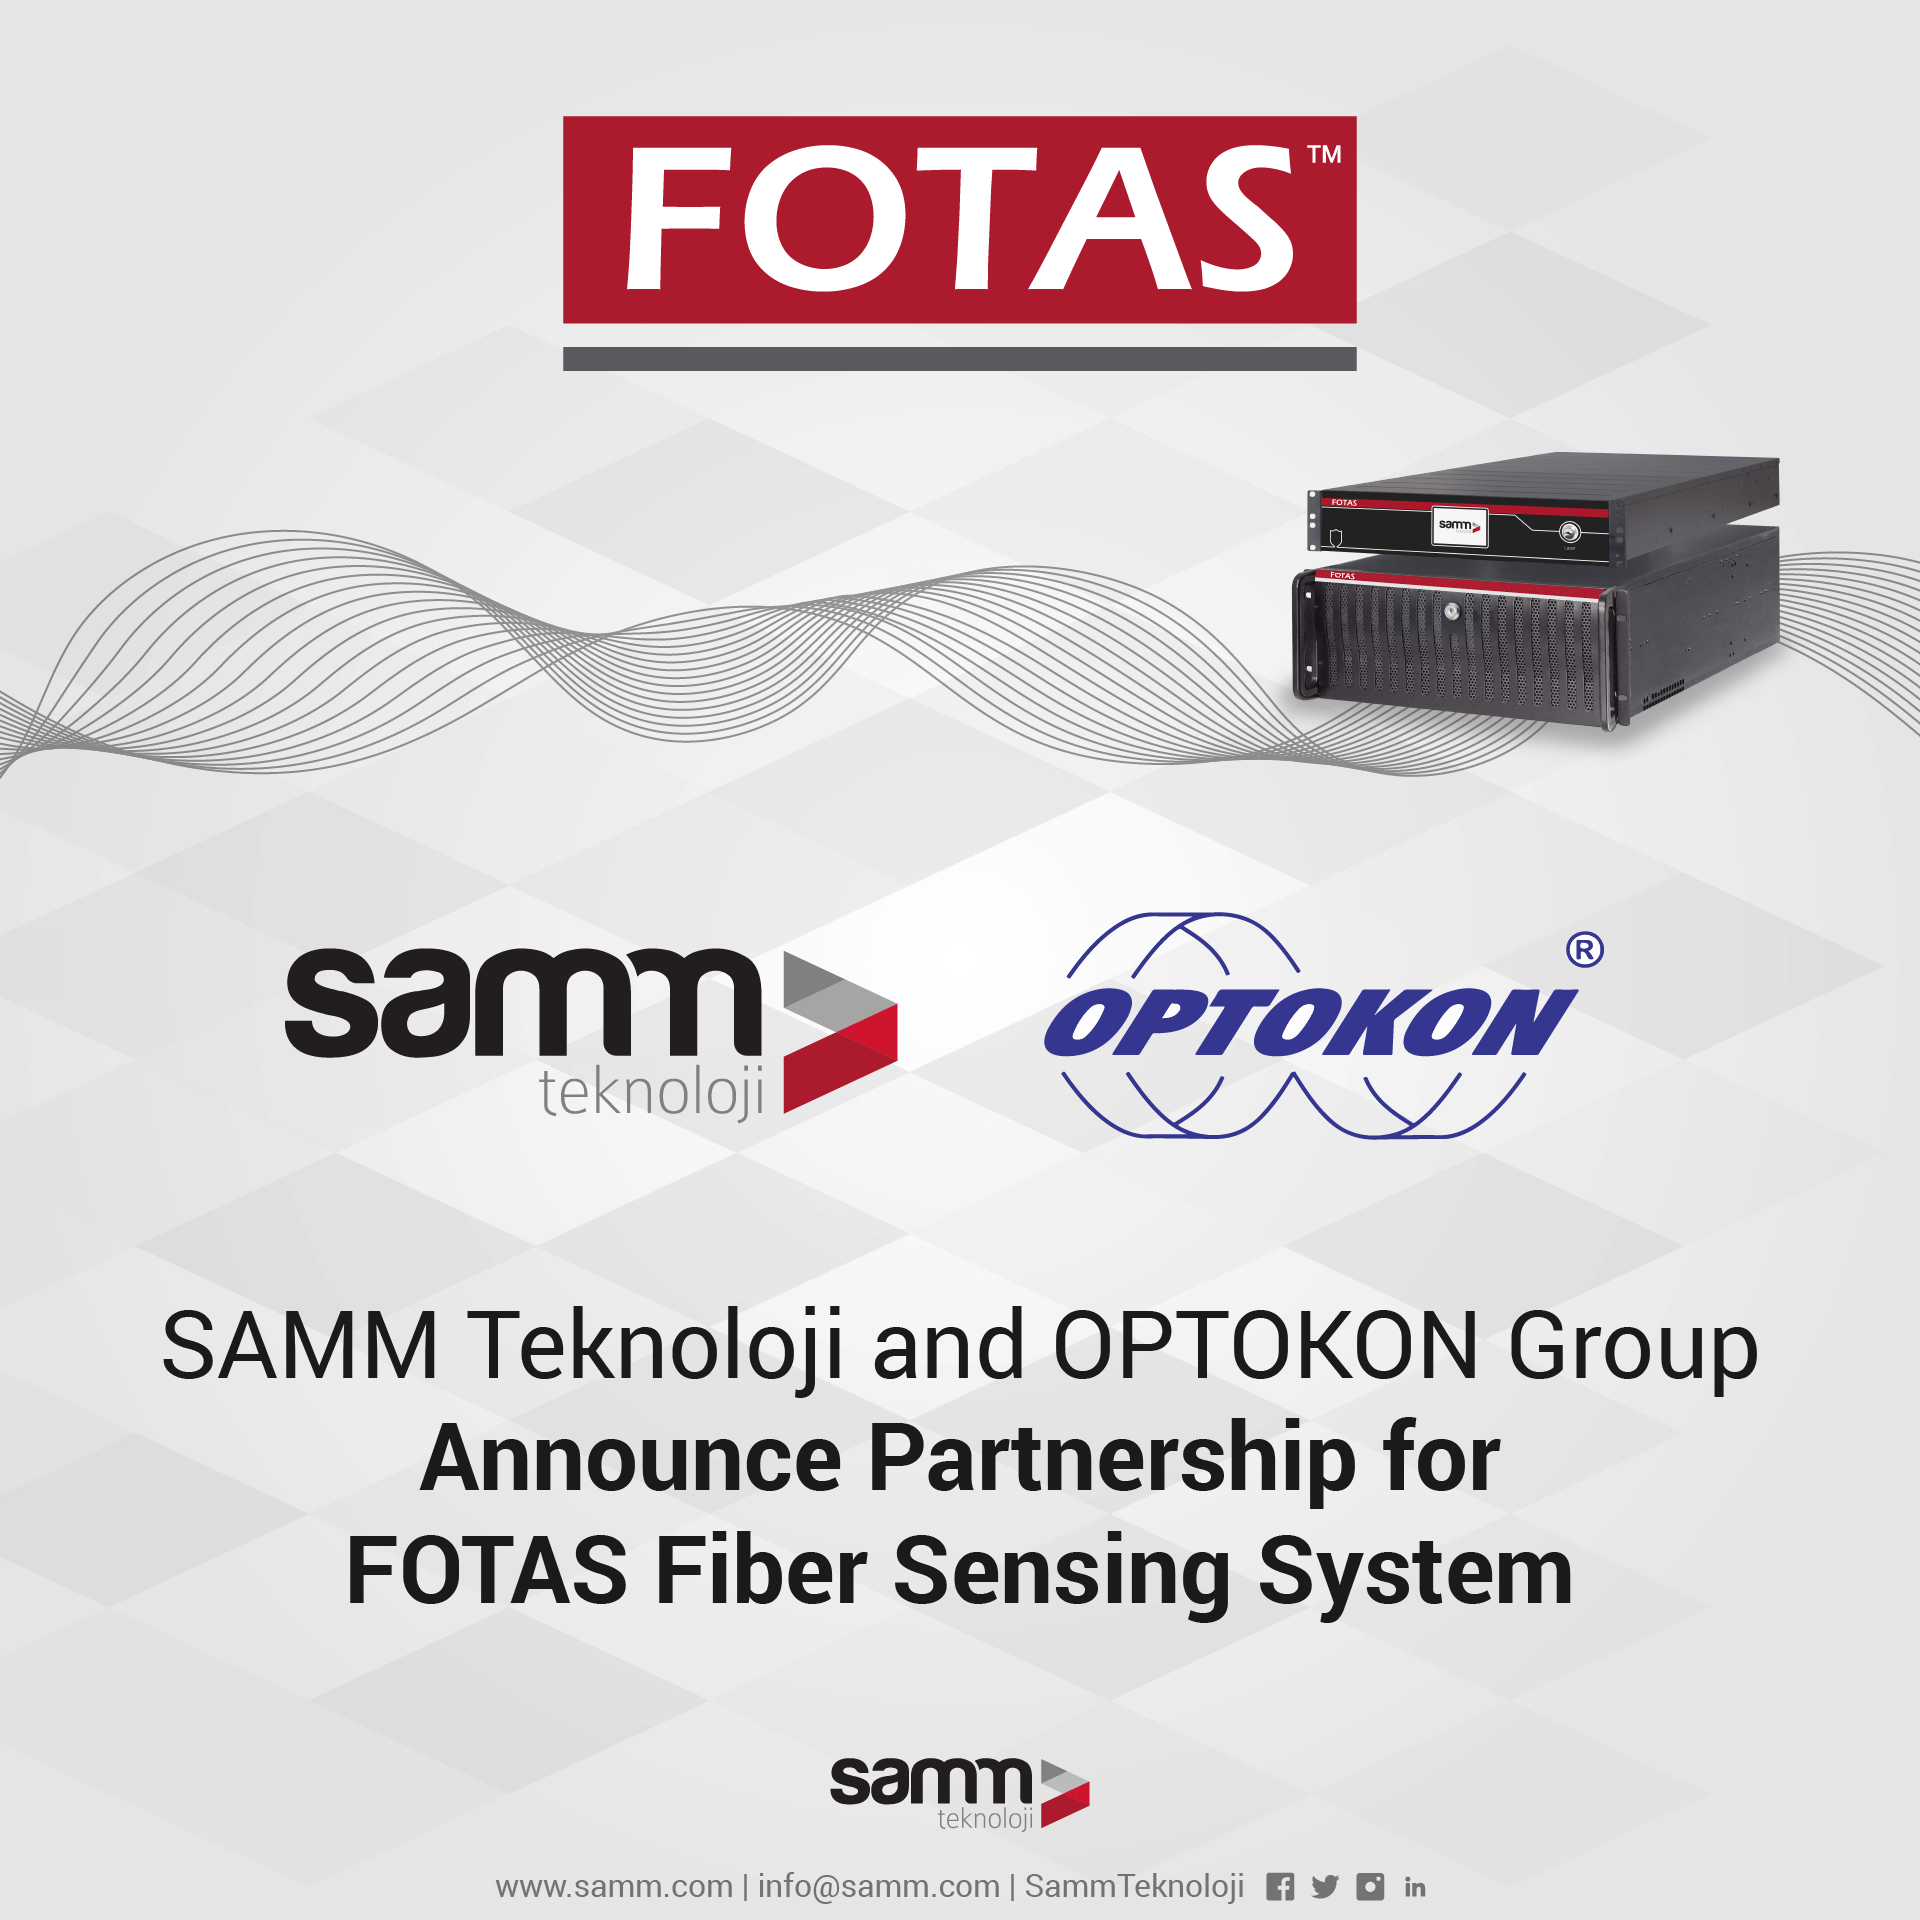 SAMM Teknoloji and OPTOKON Group and Announce Partnership for FOTAS Fiber Sensing System